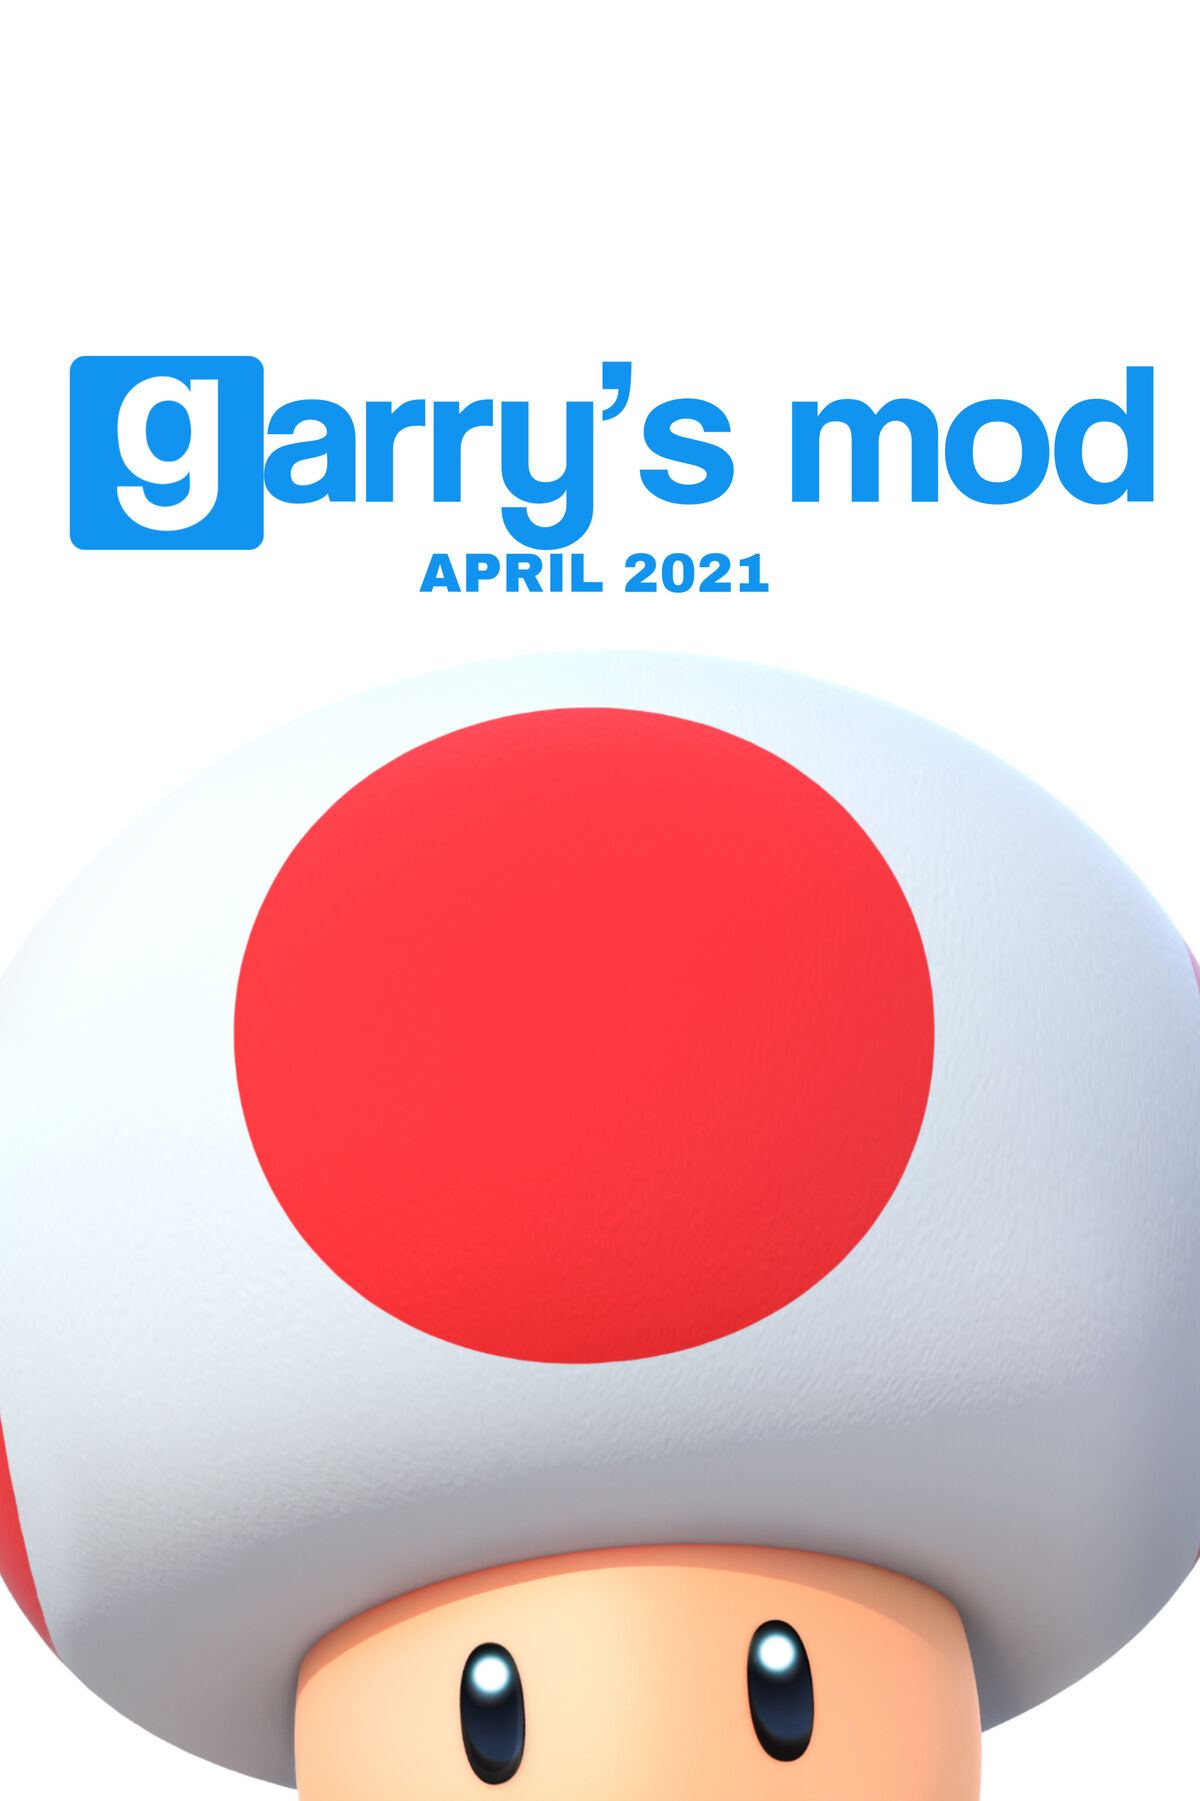 garry's mod (logo) - Garrys Mod - Posters and Art Prints